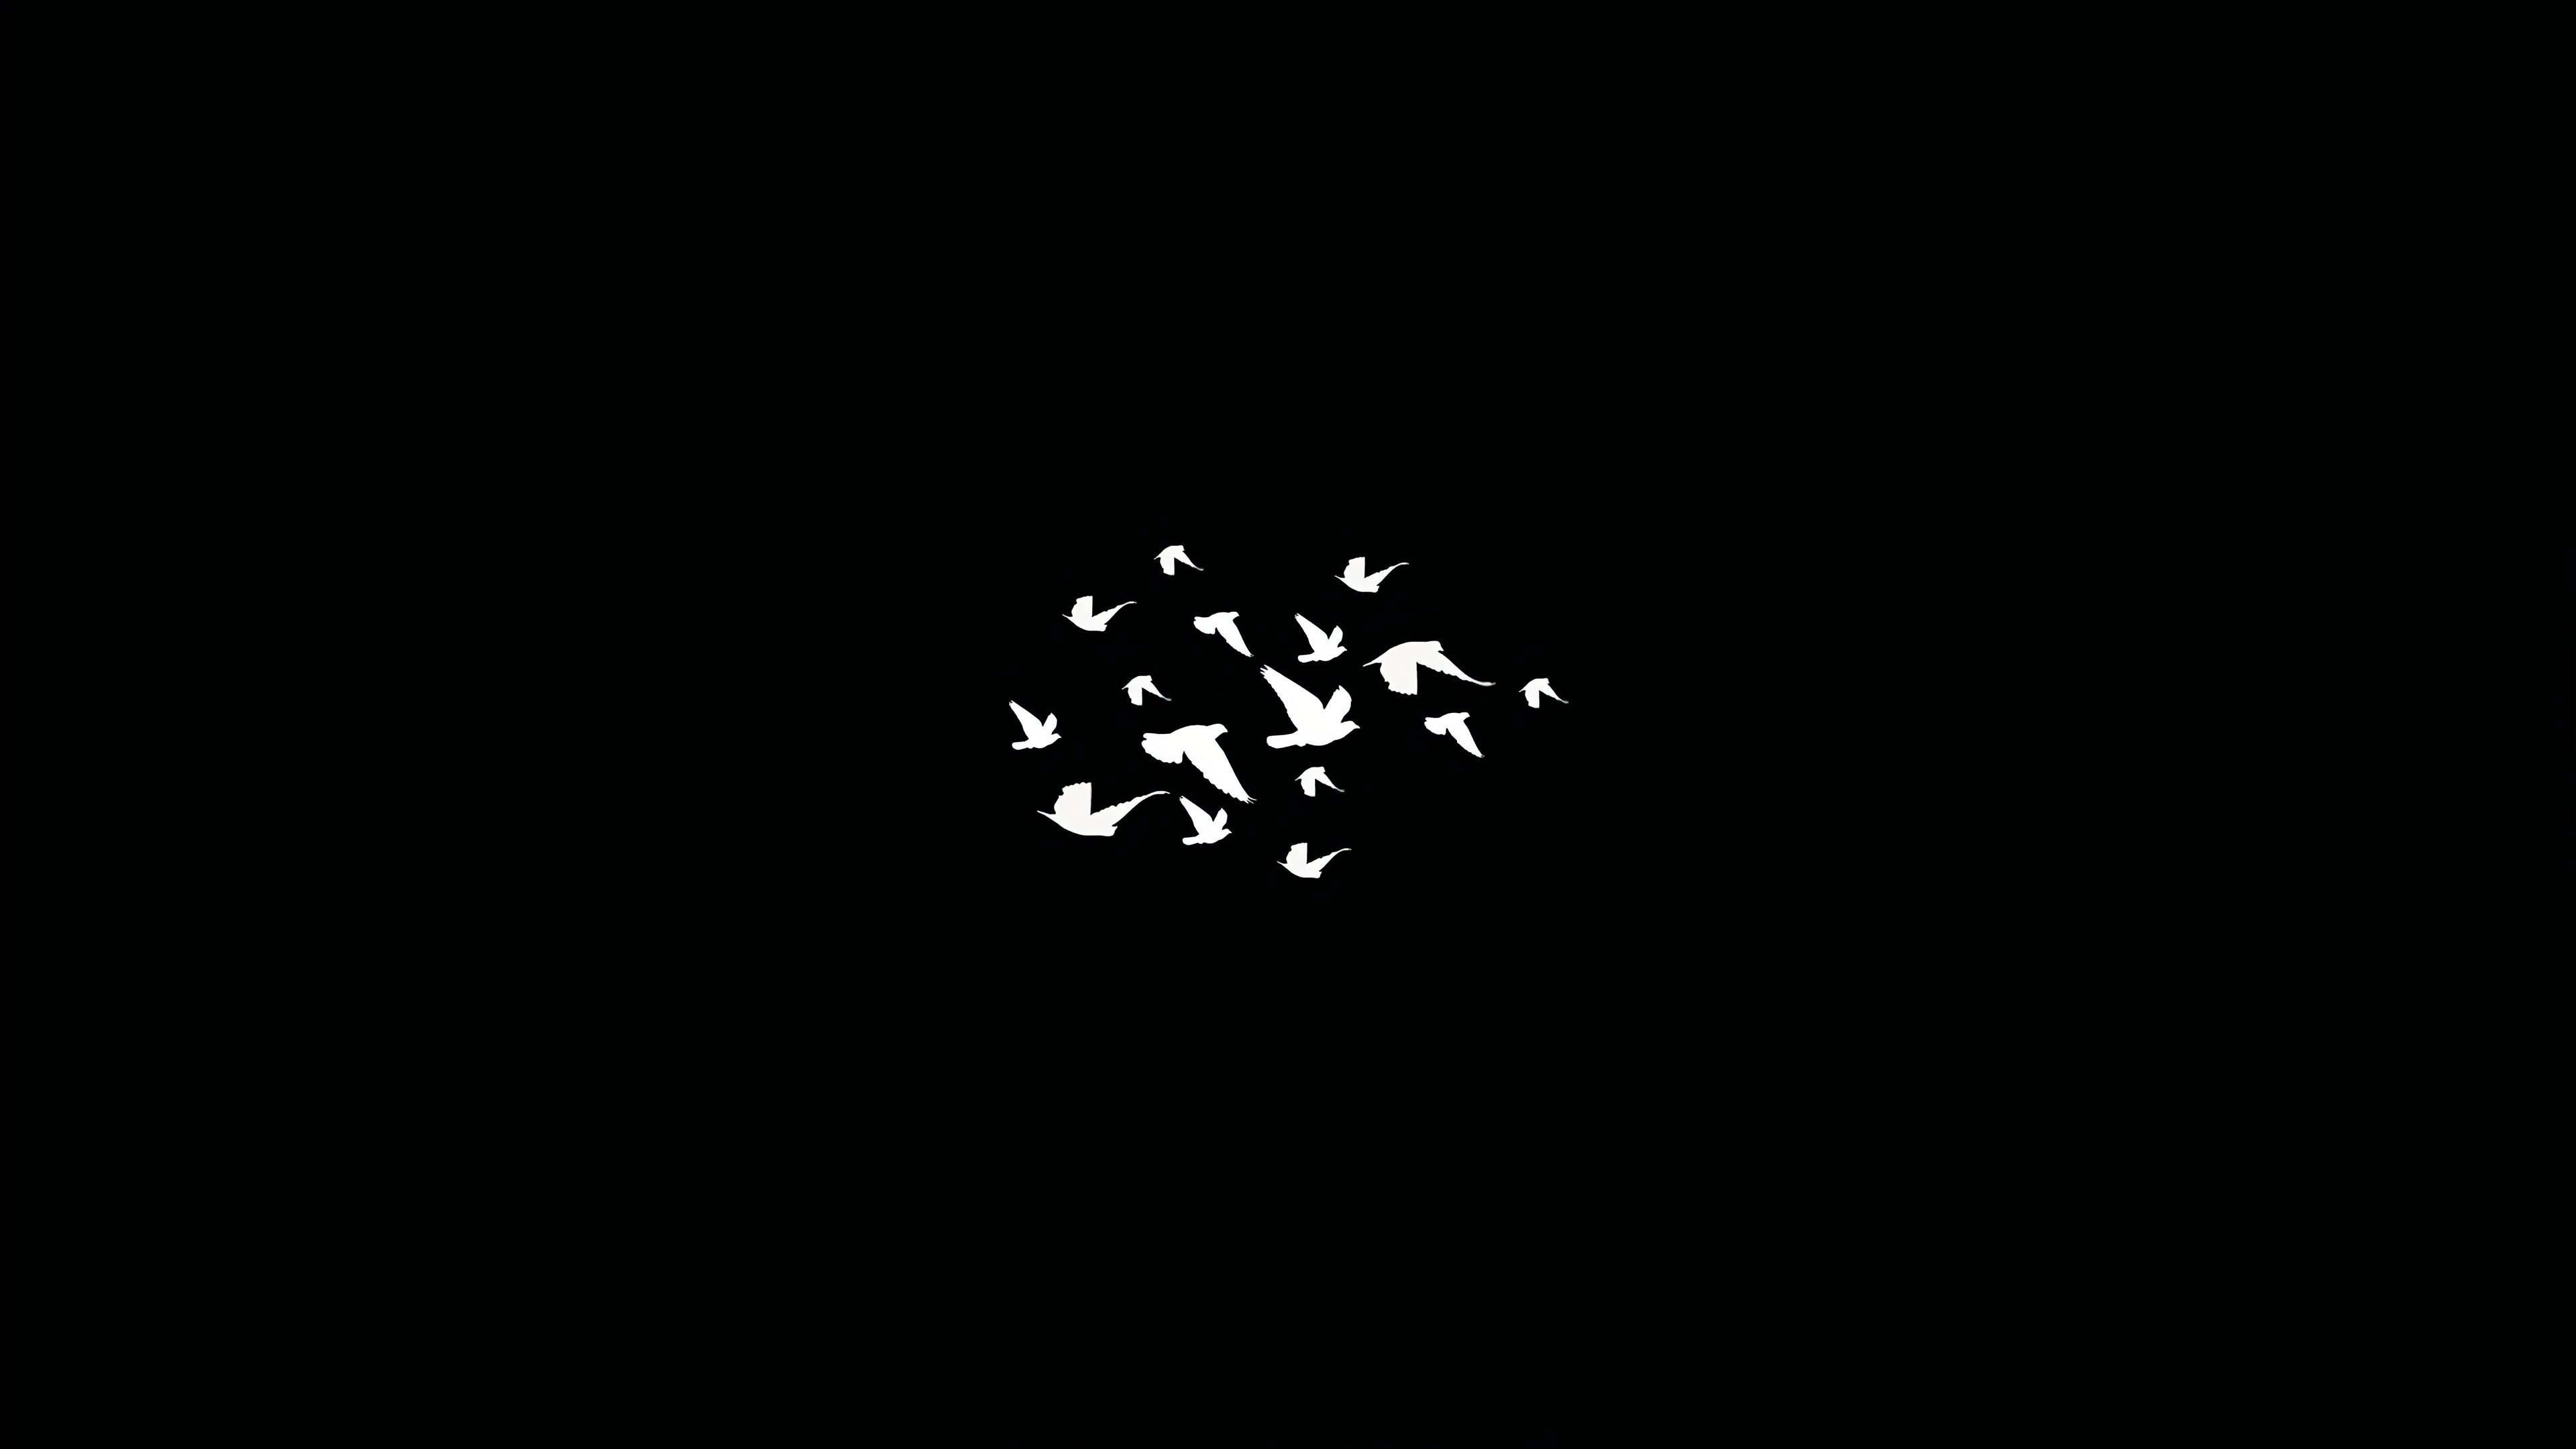 Birds Flying Minimalist Dark 4k 2048x1152 Resolution HD 4k Wallpaper, Image, Background, Photo and Picture